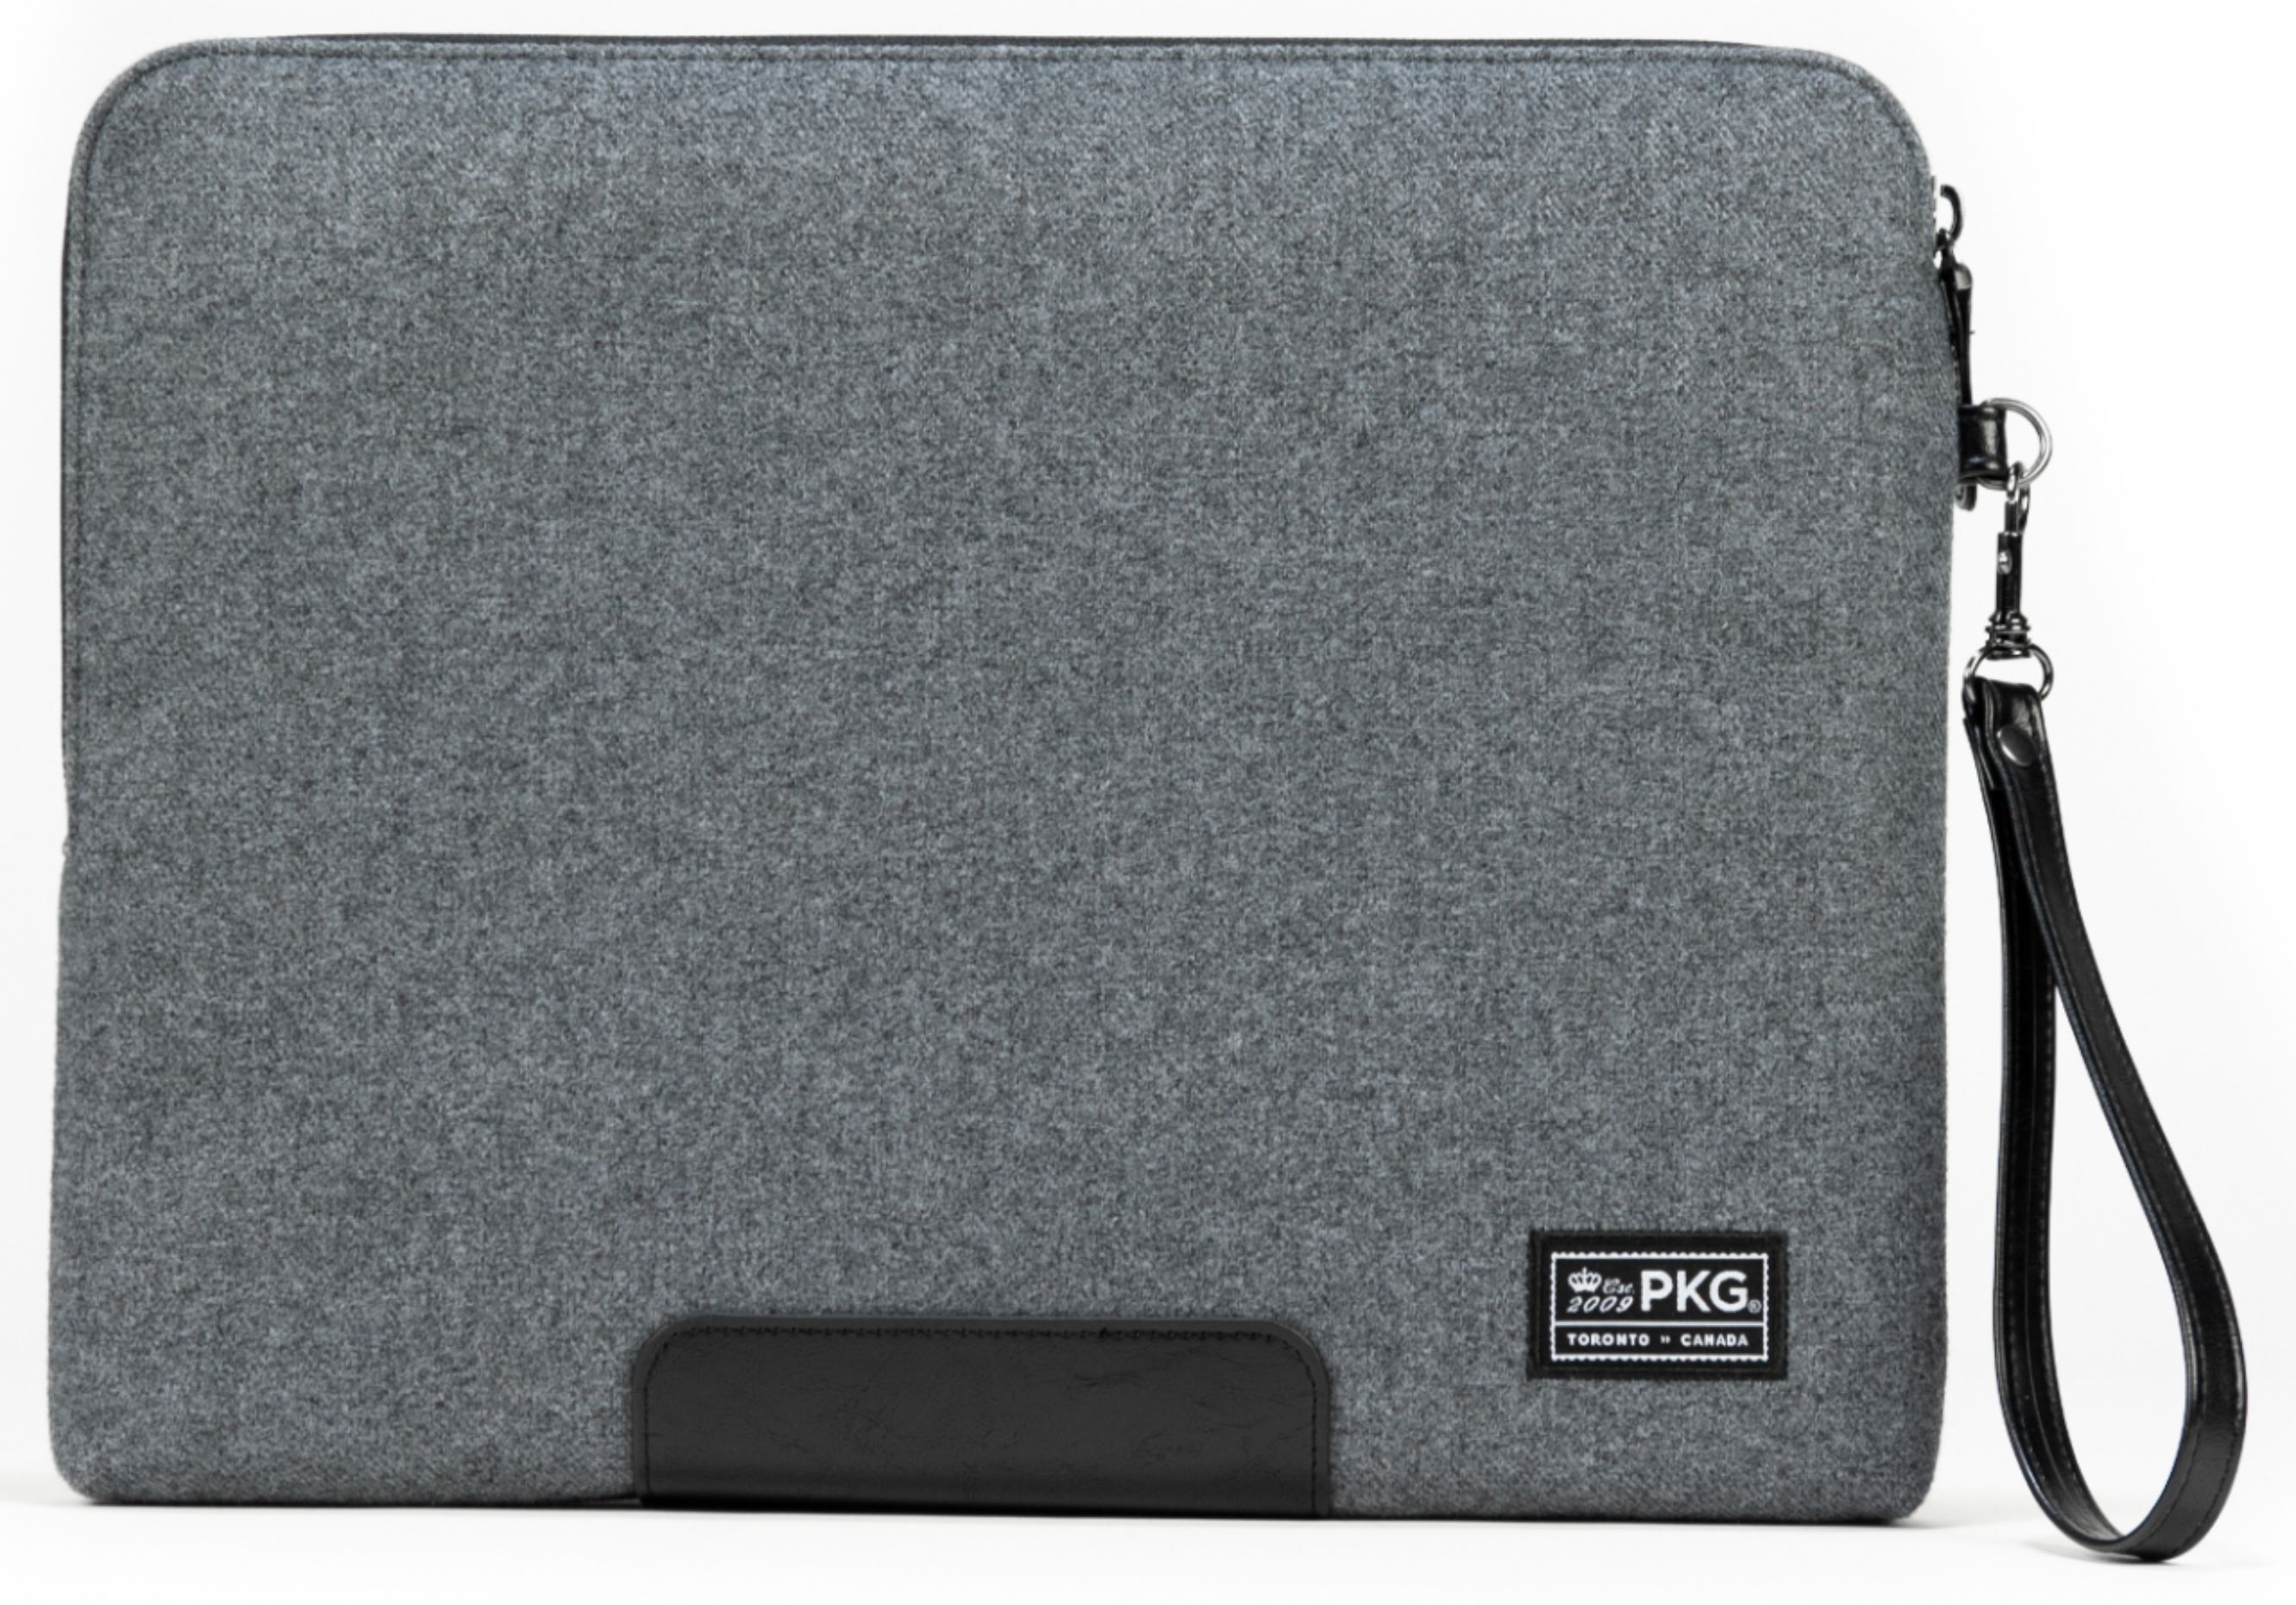 Back View: PKG - Sleeve for 14" Laptop - Gray